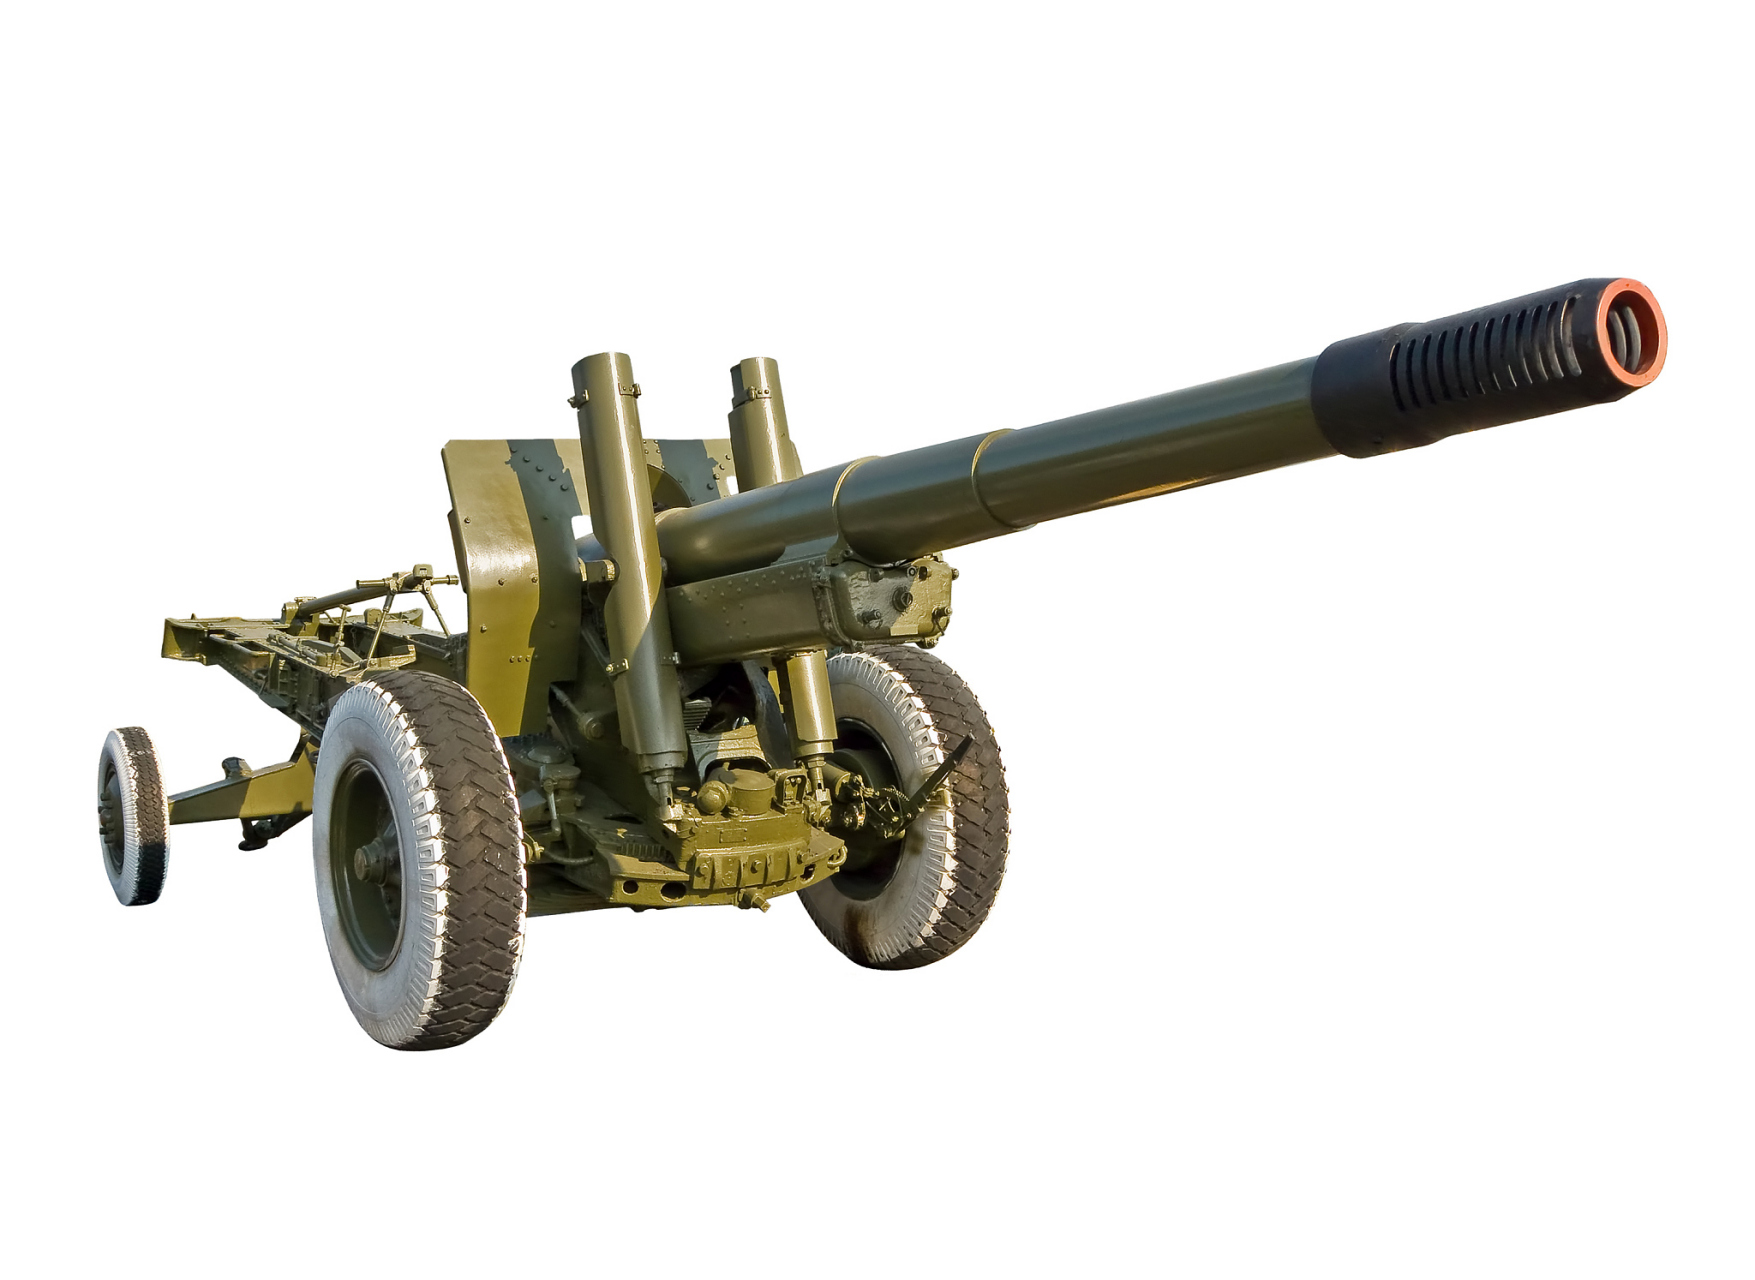 200mm榴弹炮图片